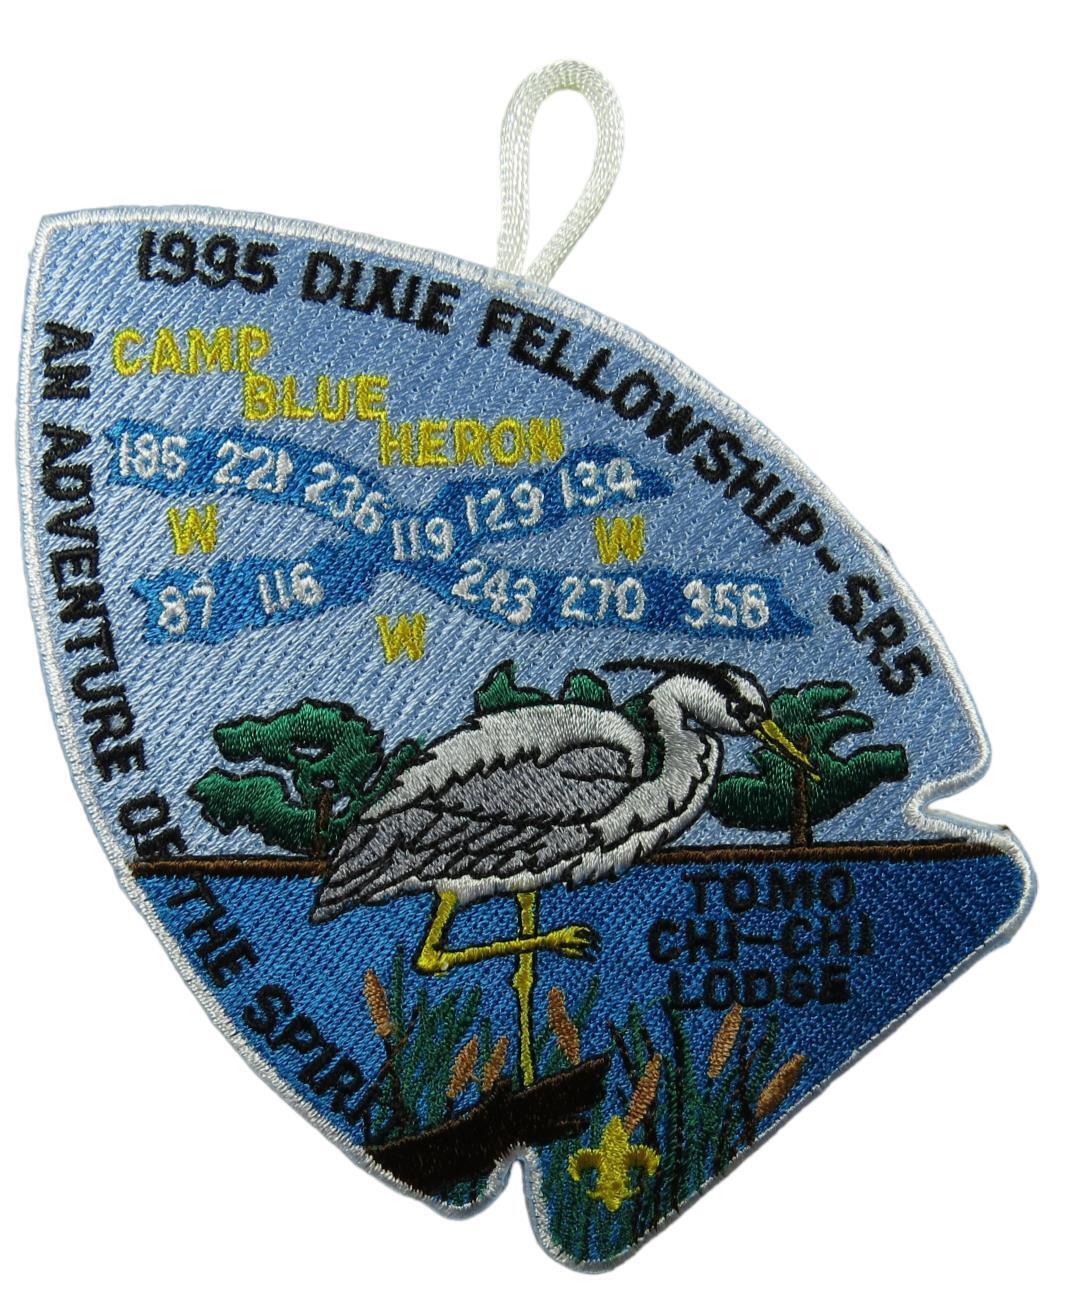 1995 SR-5 Dixie Fellowship Tomo Chi-Chi #119 Camp Blue Heron Patch (DIX284)